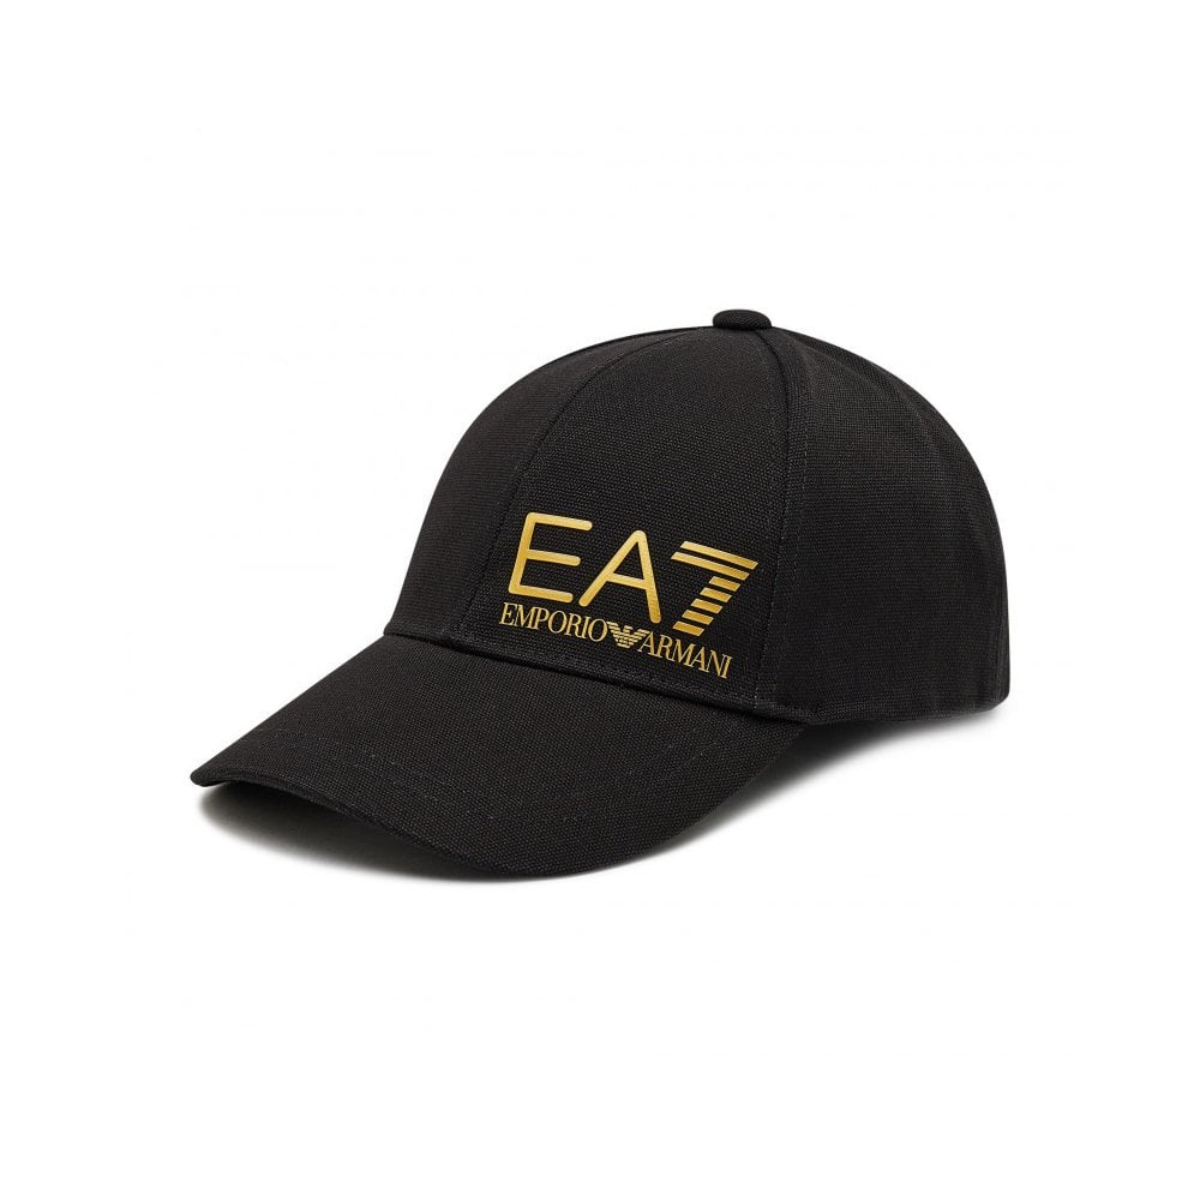 EA7 Giorgio Armani - Unisex Woven Baseball Cap - Black/Gold